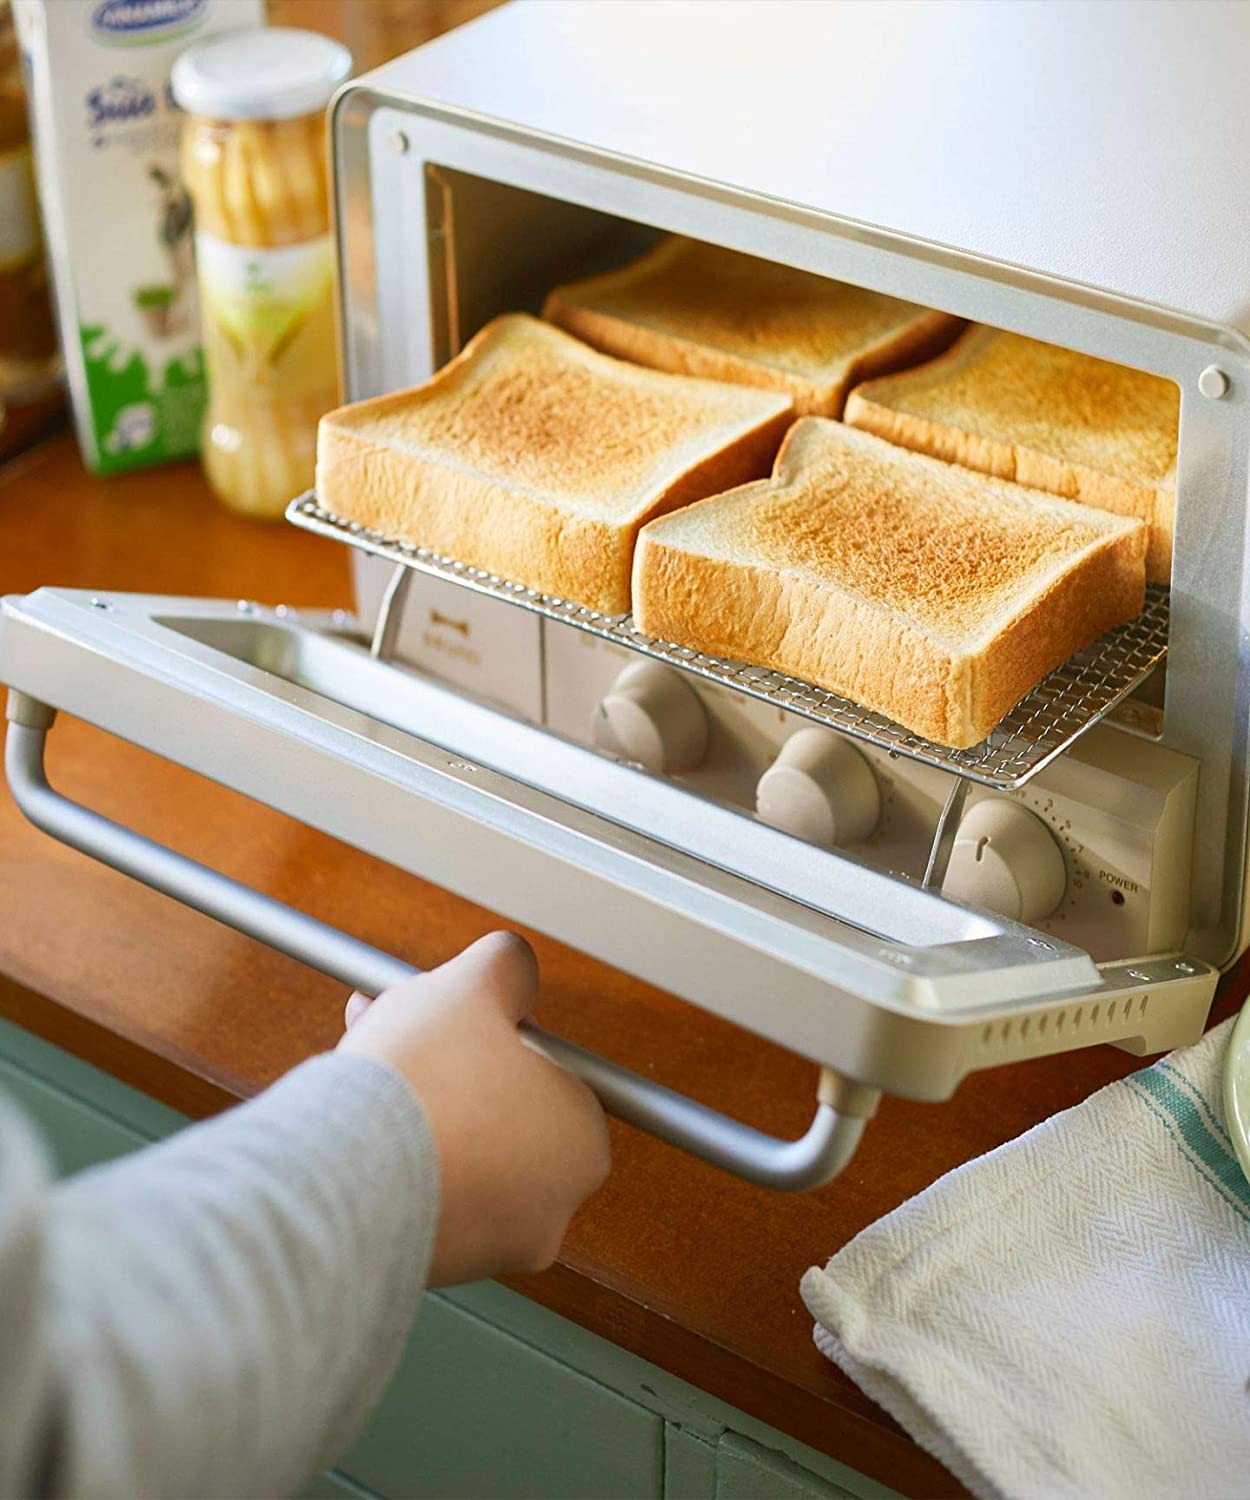 BRUNO BOE067-GRG Toaster, 4 Pieces, Popular, Steam Function